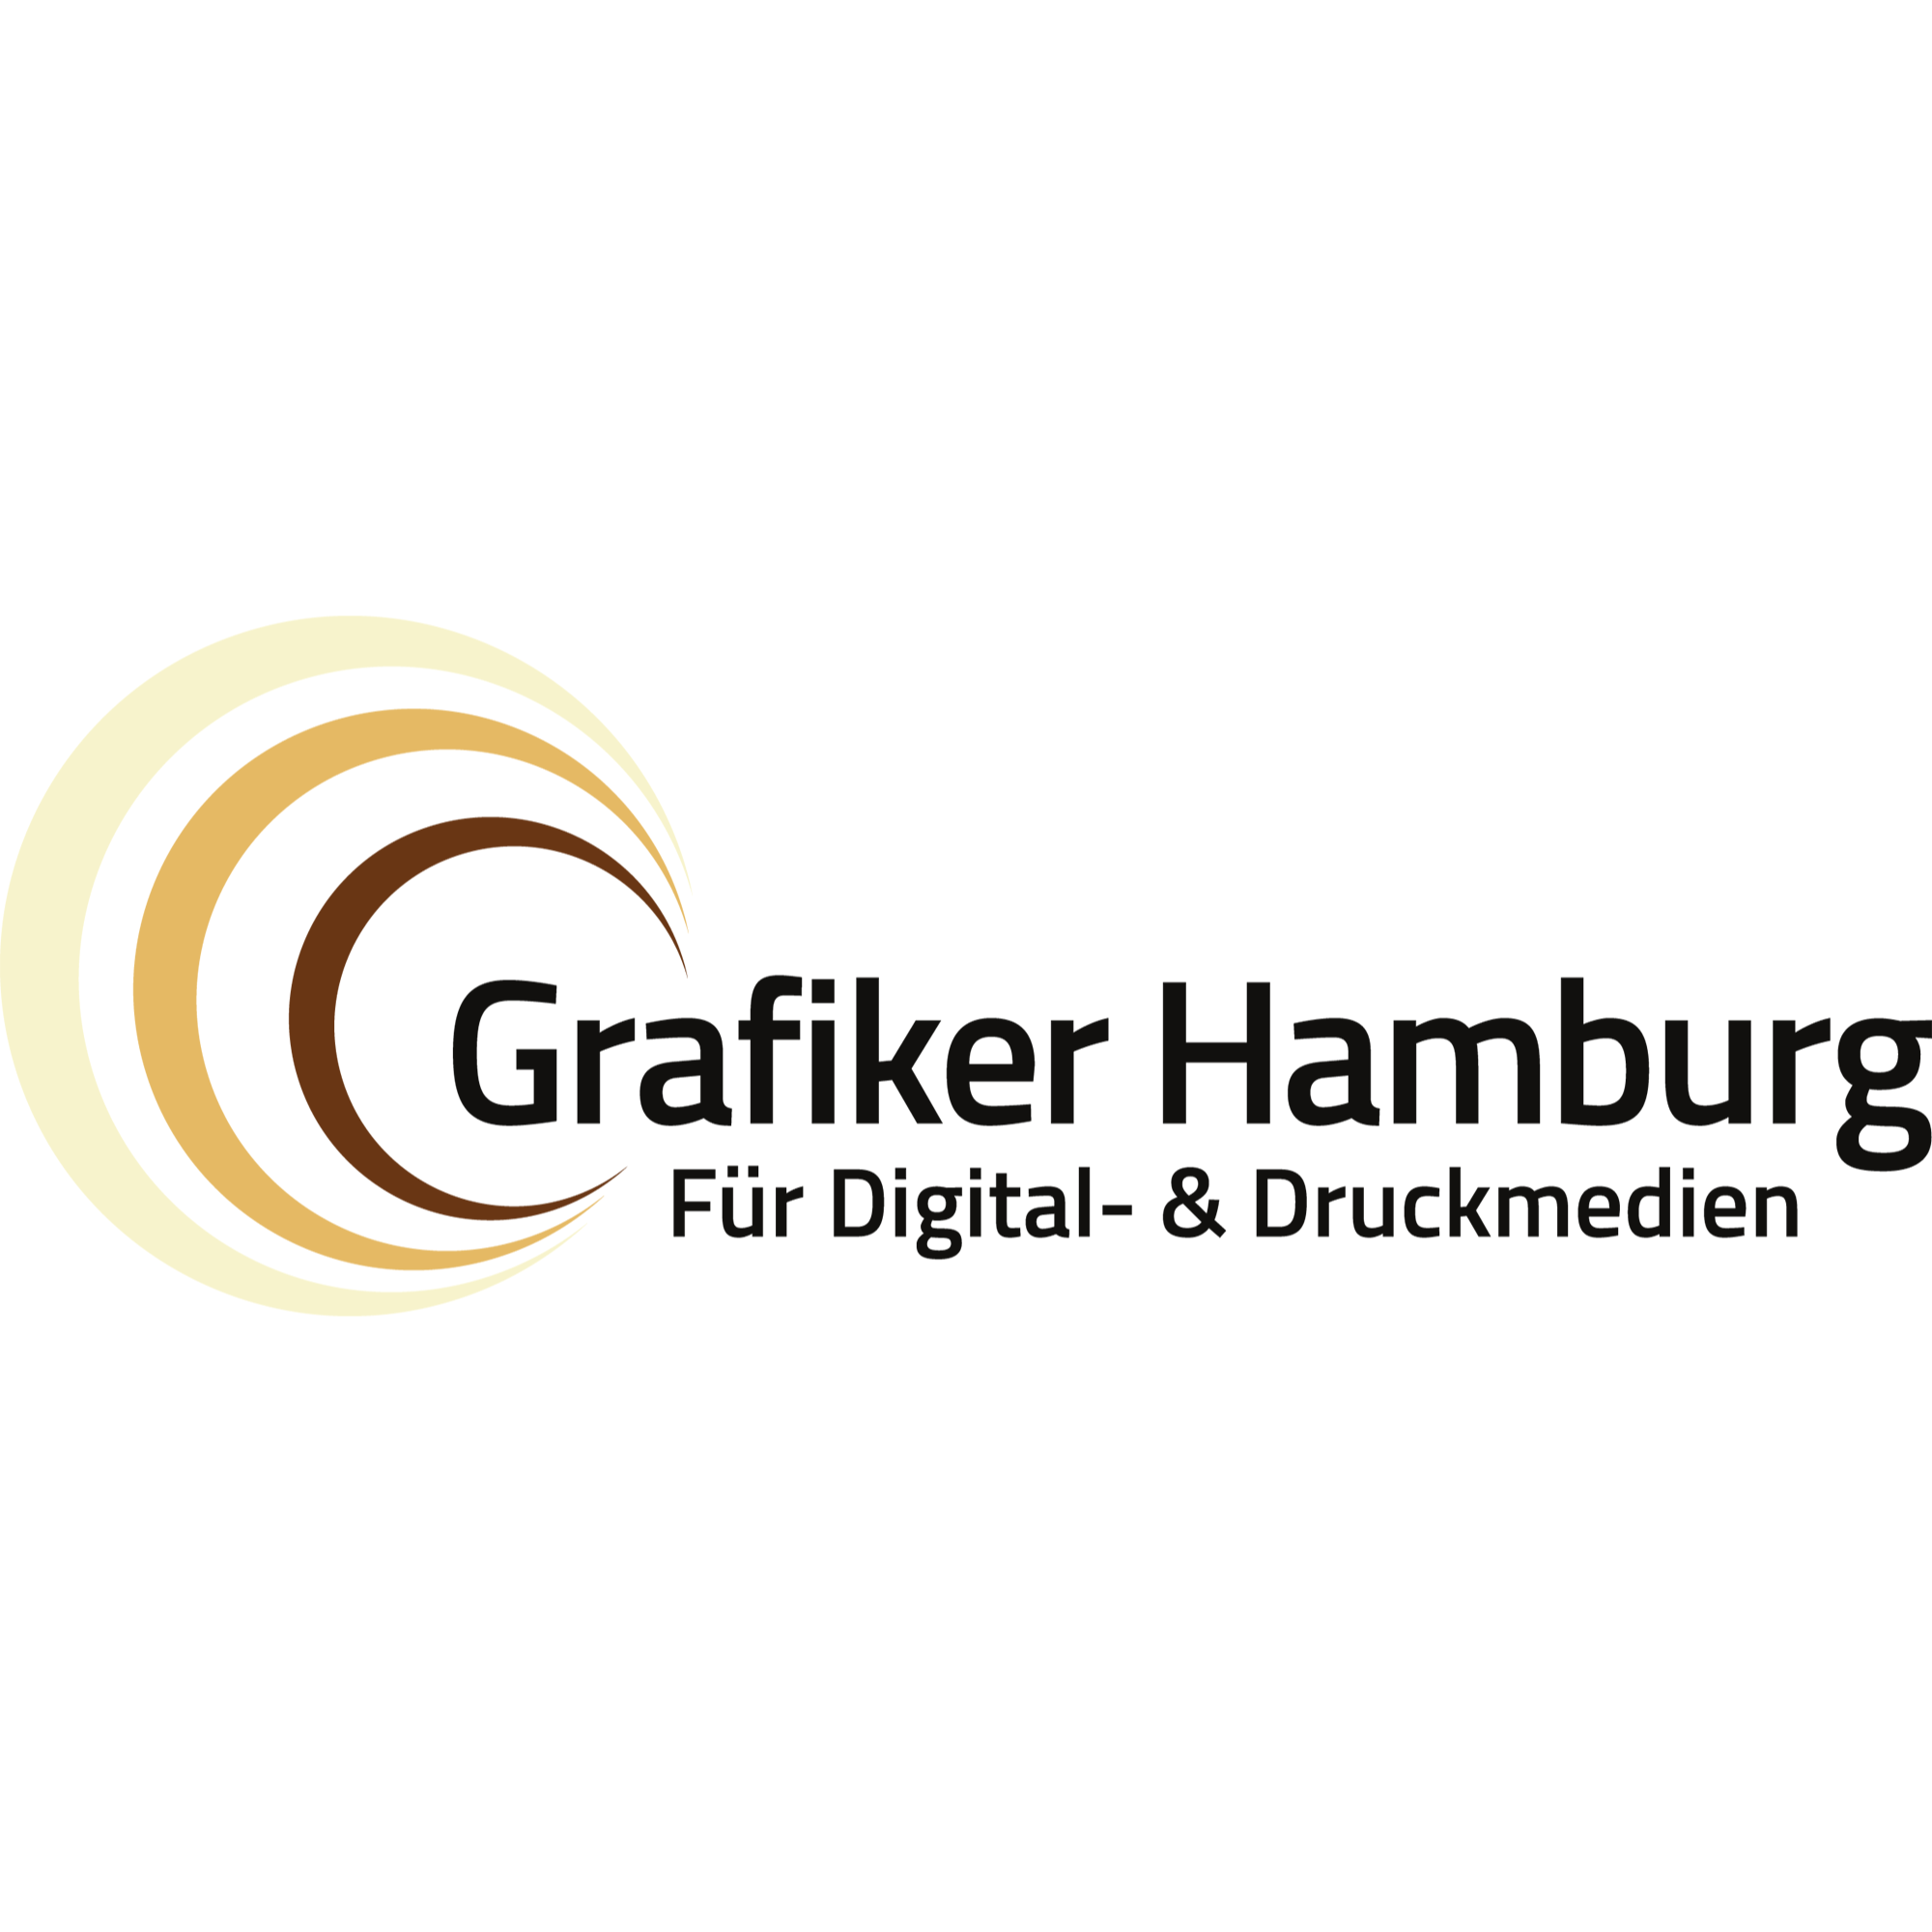 Grafiker Hamburg-Digital- & Druckmedien in Hamburg - Logo